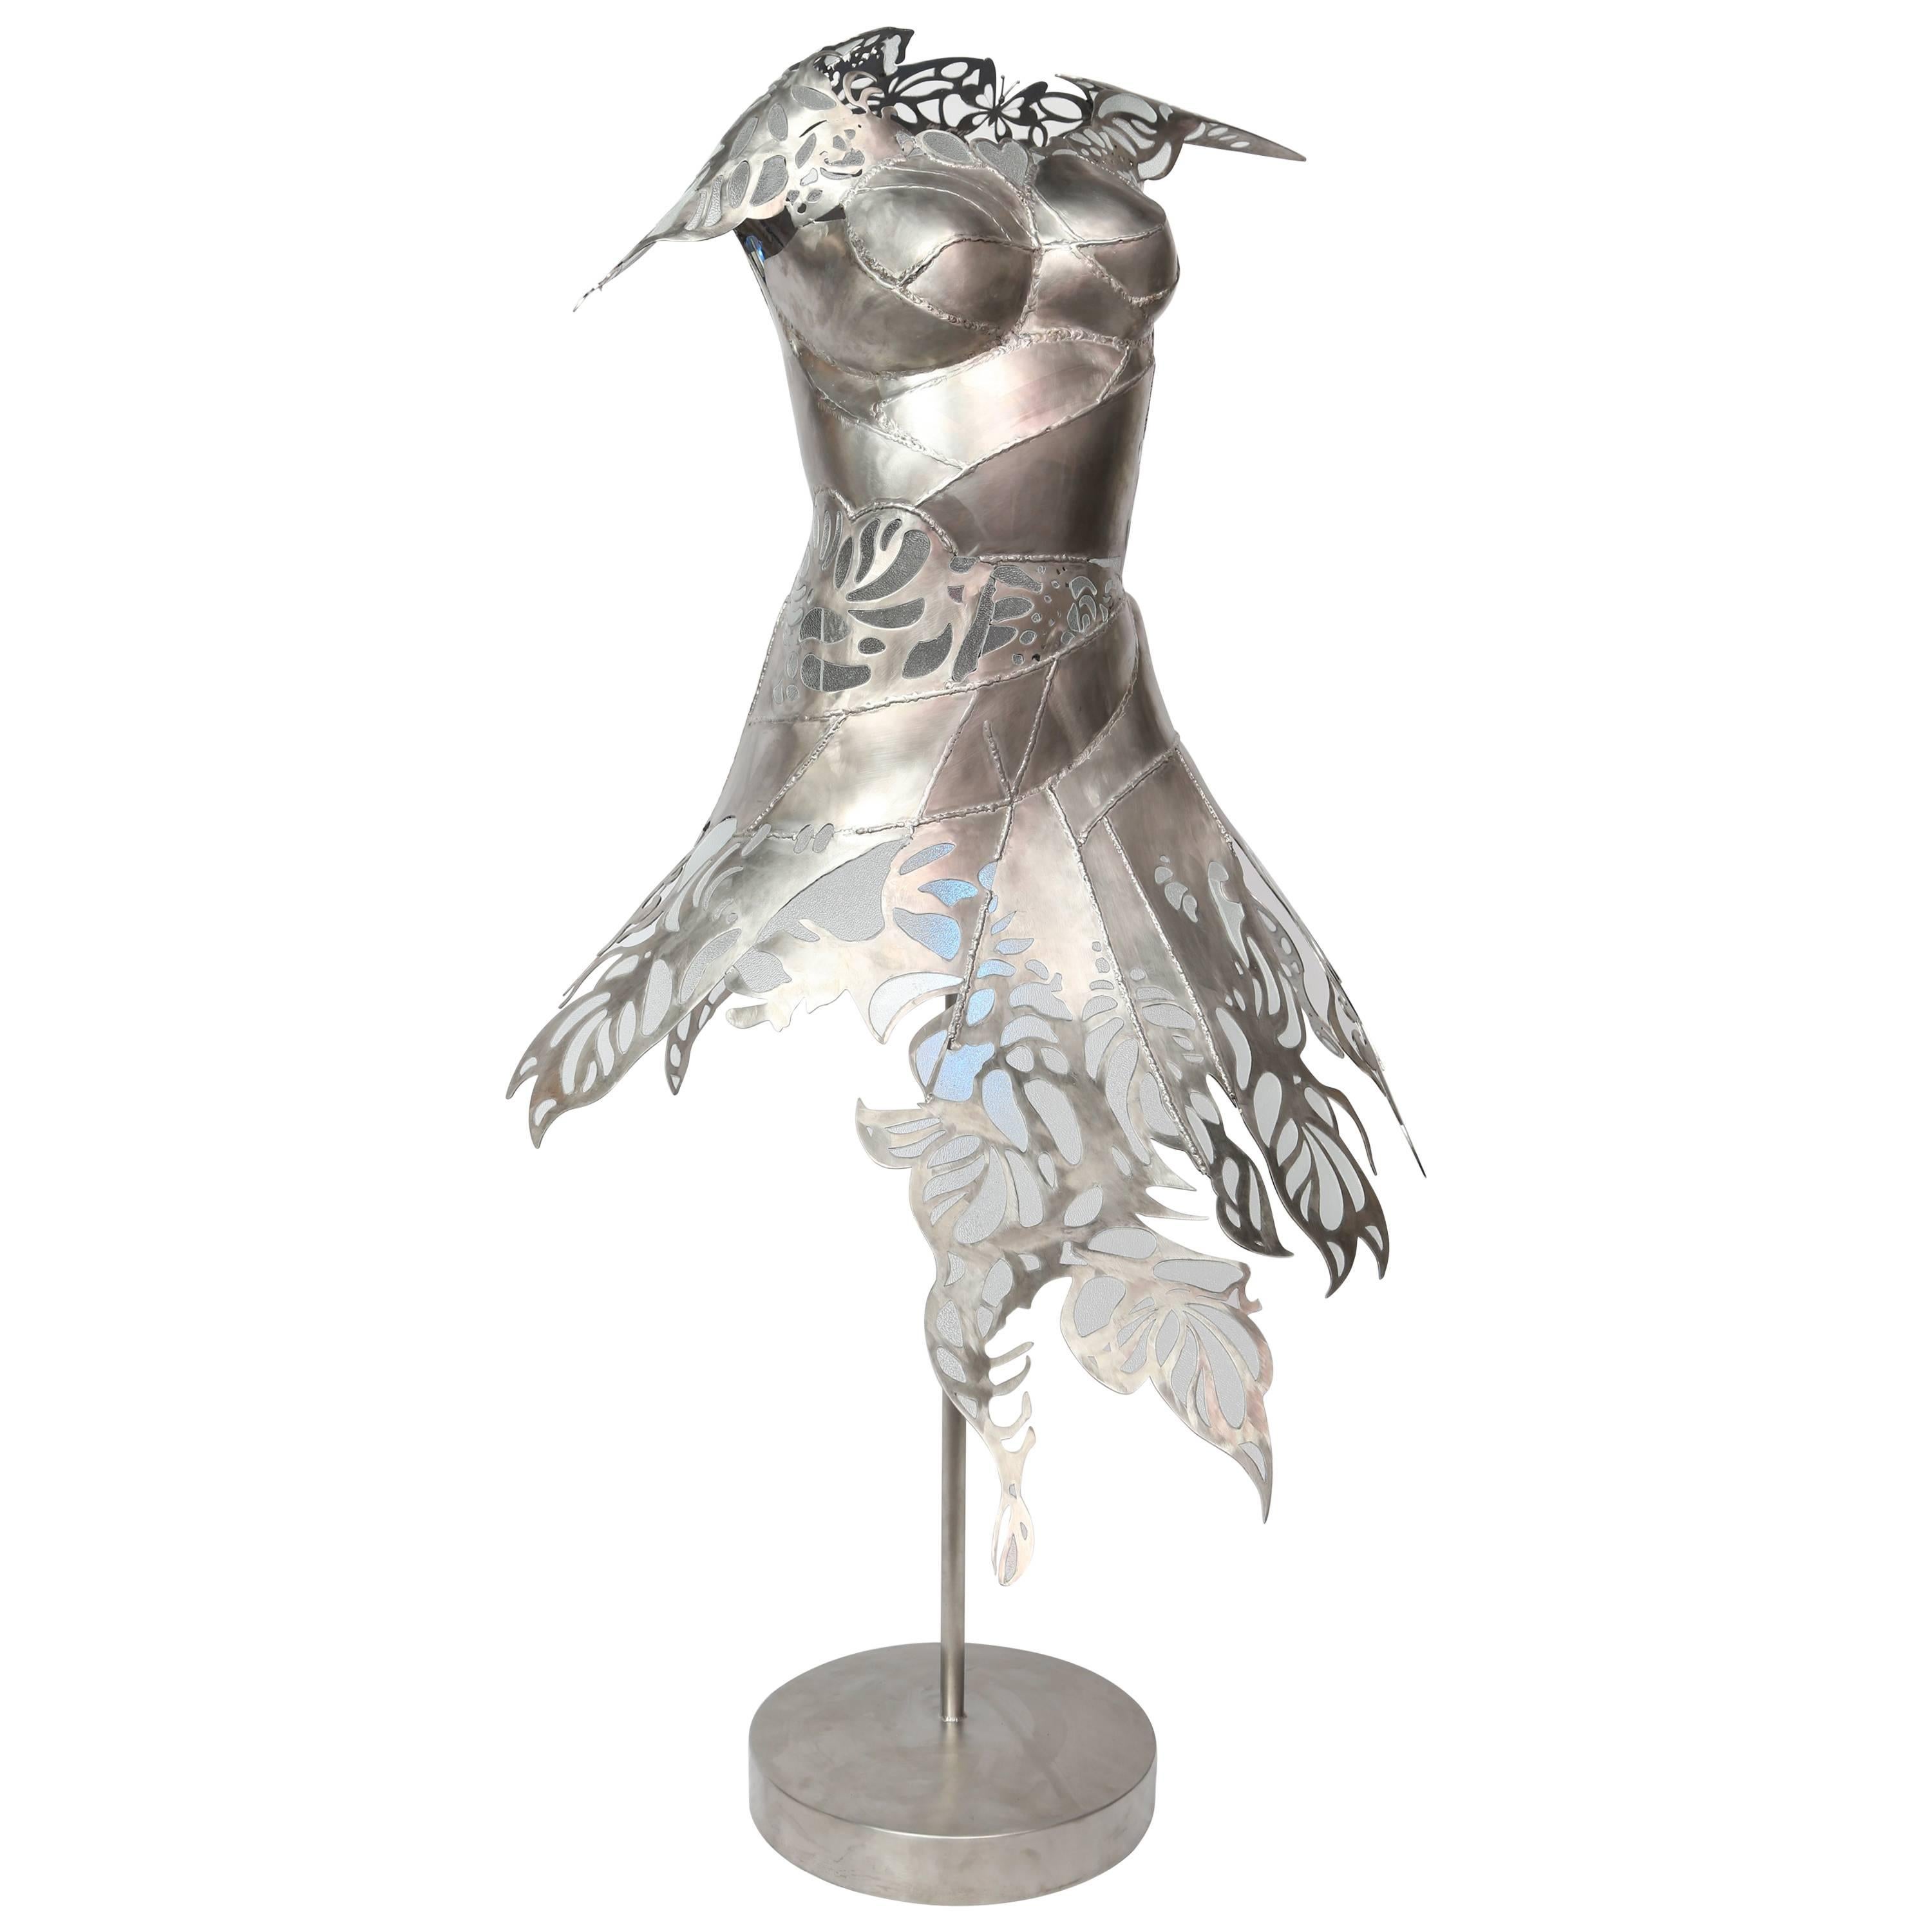 Illuminating Steel and Glass Euphoric Dress Sculpture